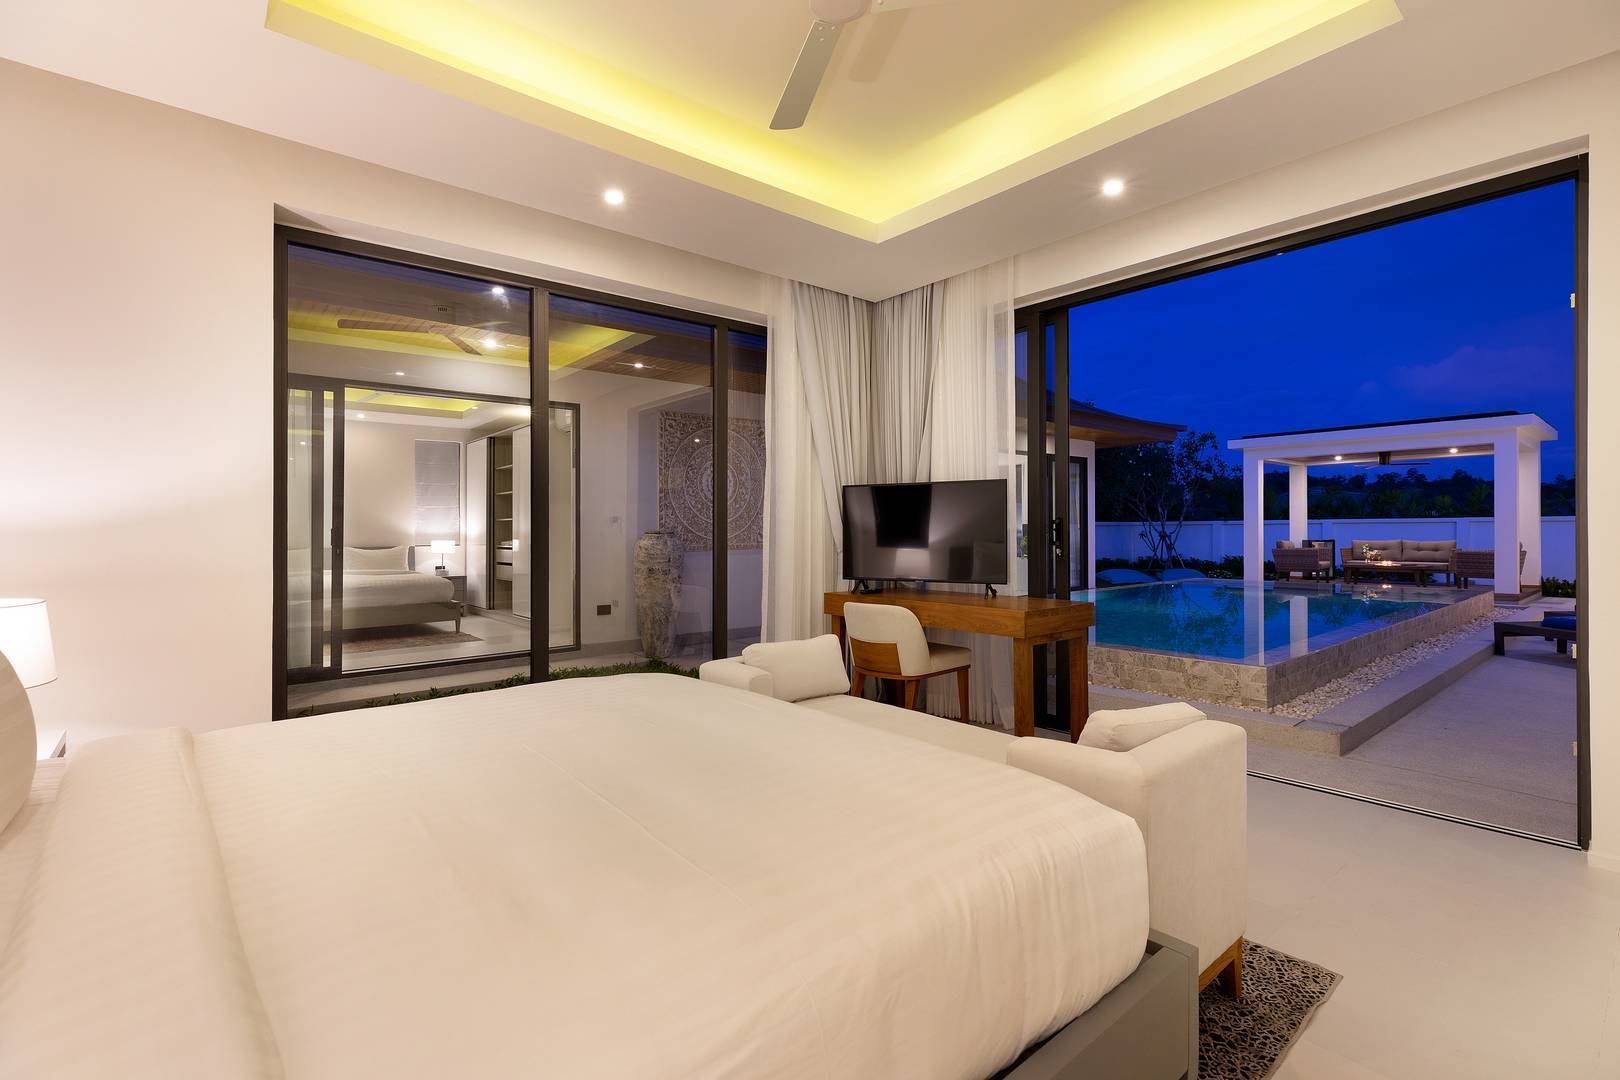 3 bedroom Villa Paradise for rent in Sunway Villas : 3 bedroom Villa Paradise for rent in Sunway Villas 